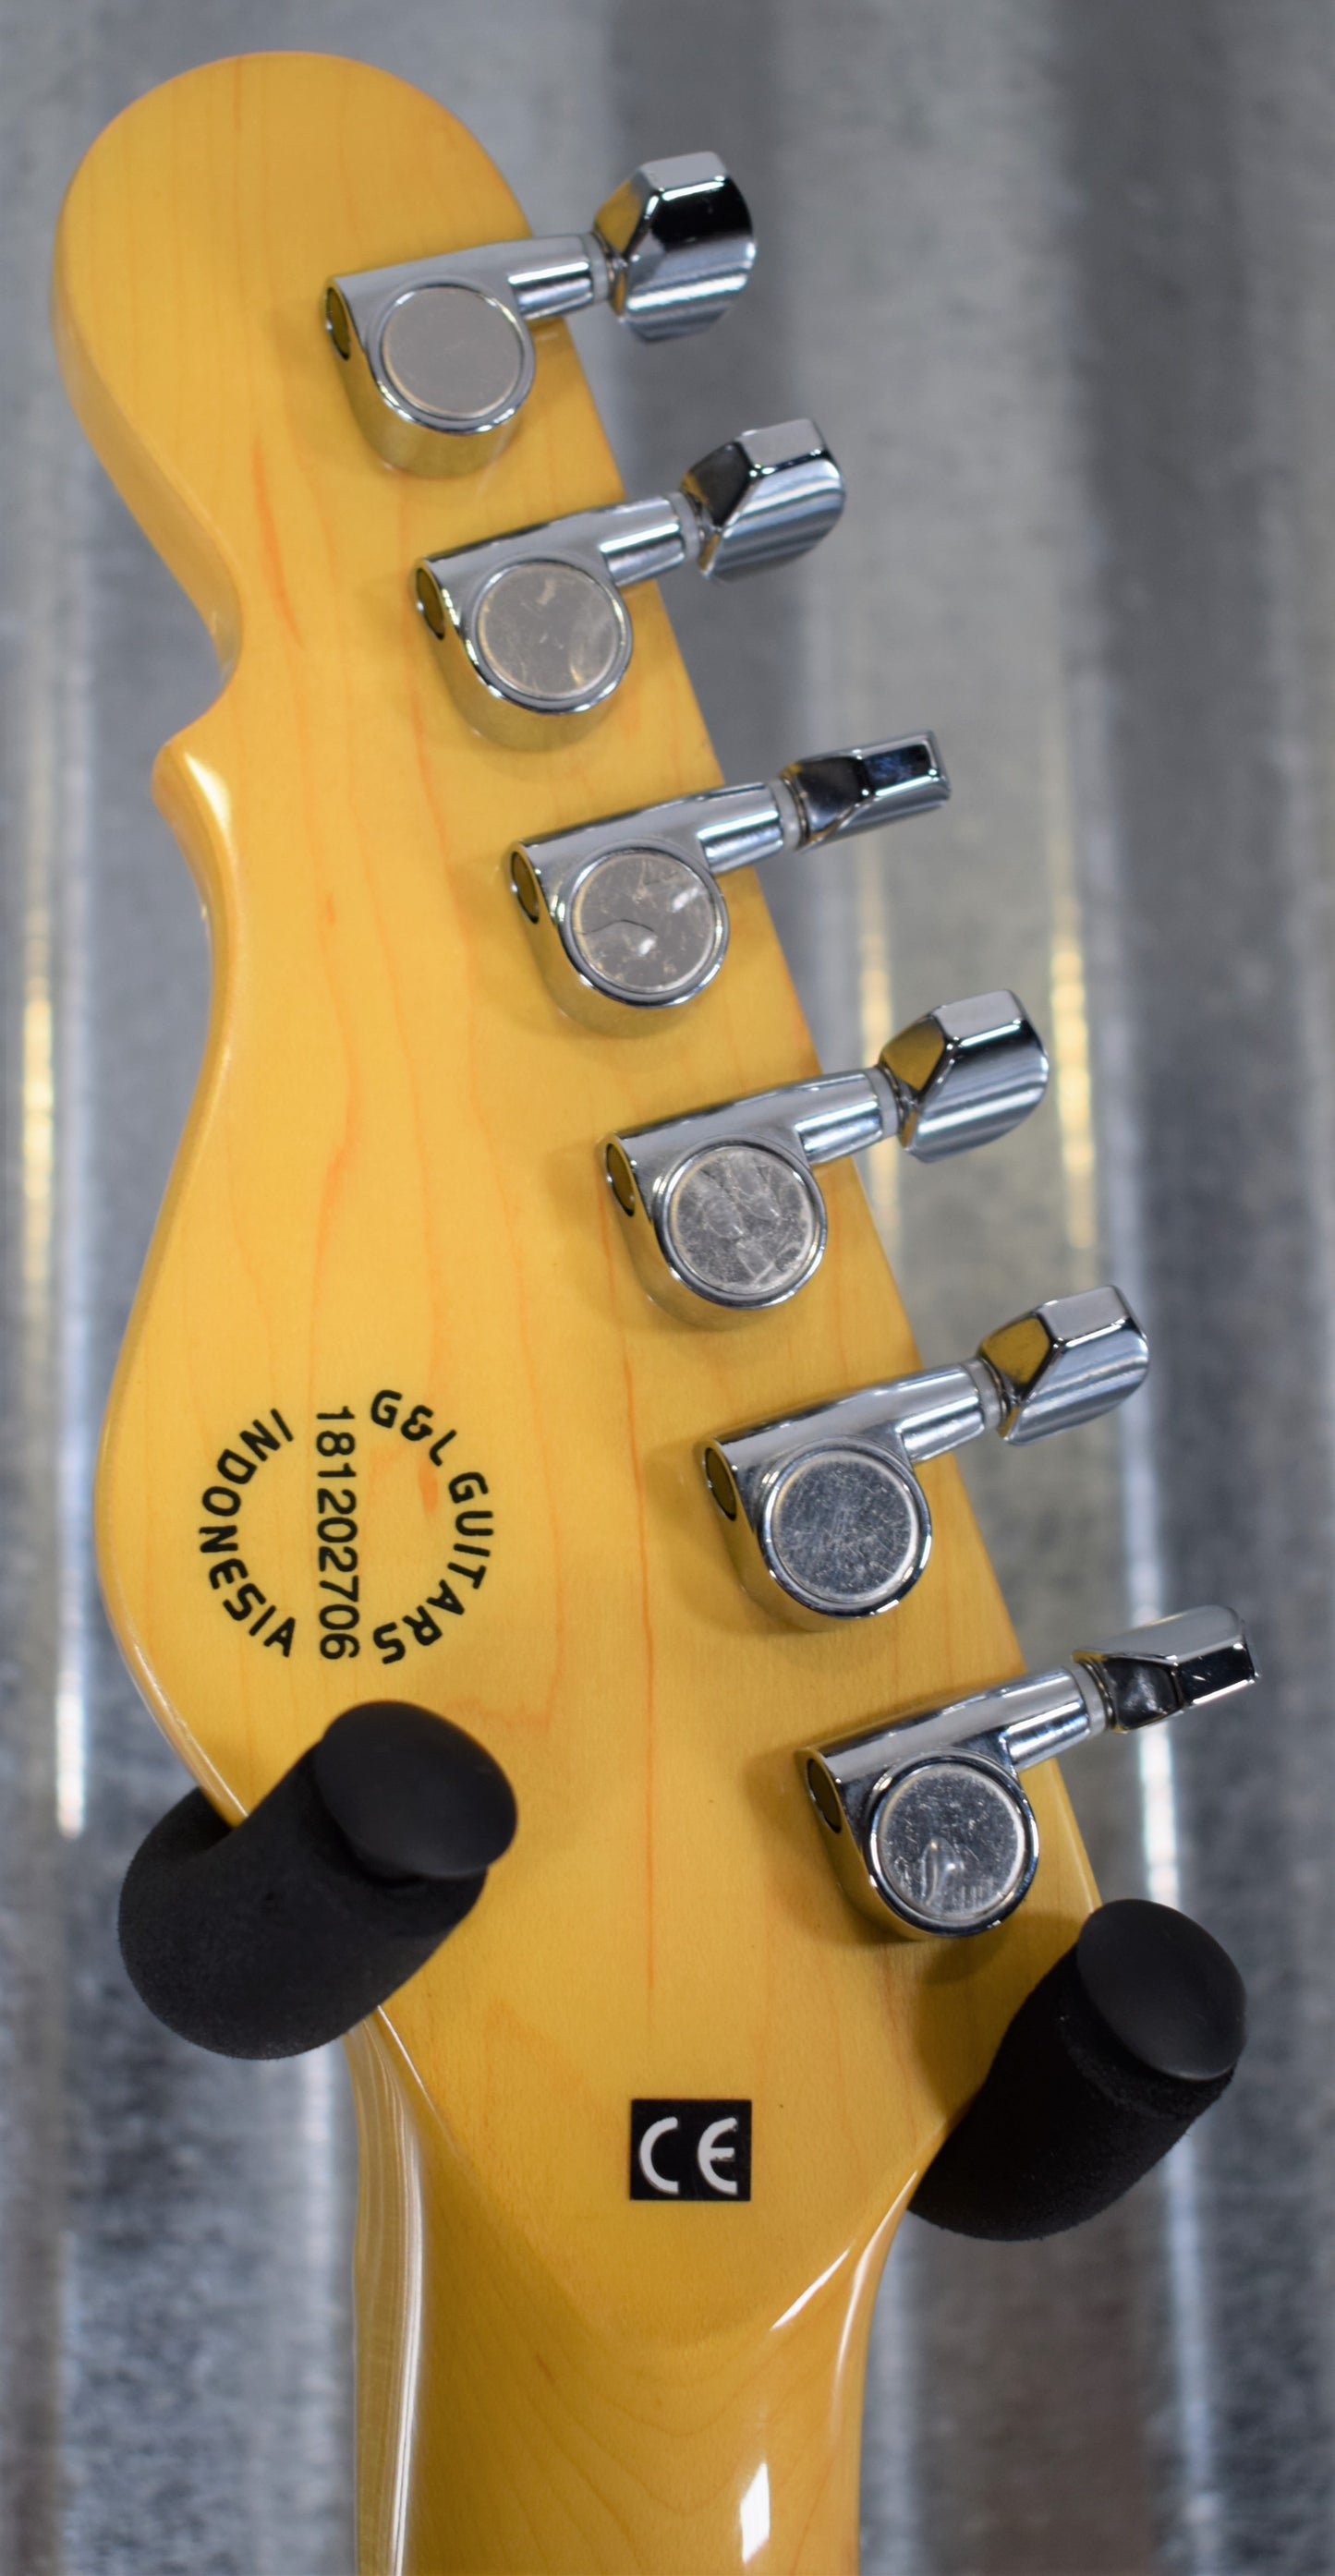 G&L Tribute ASAT Classic Bluesboy Semi Hollow Transparent Orange Guitar #2706 Demo